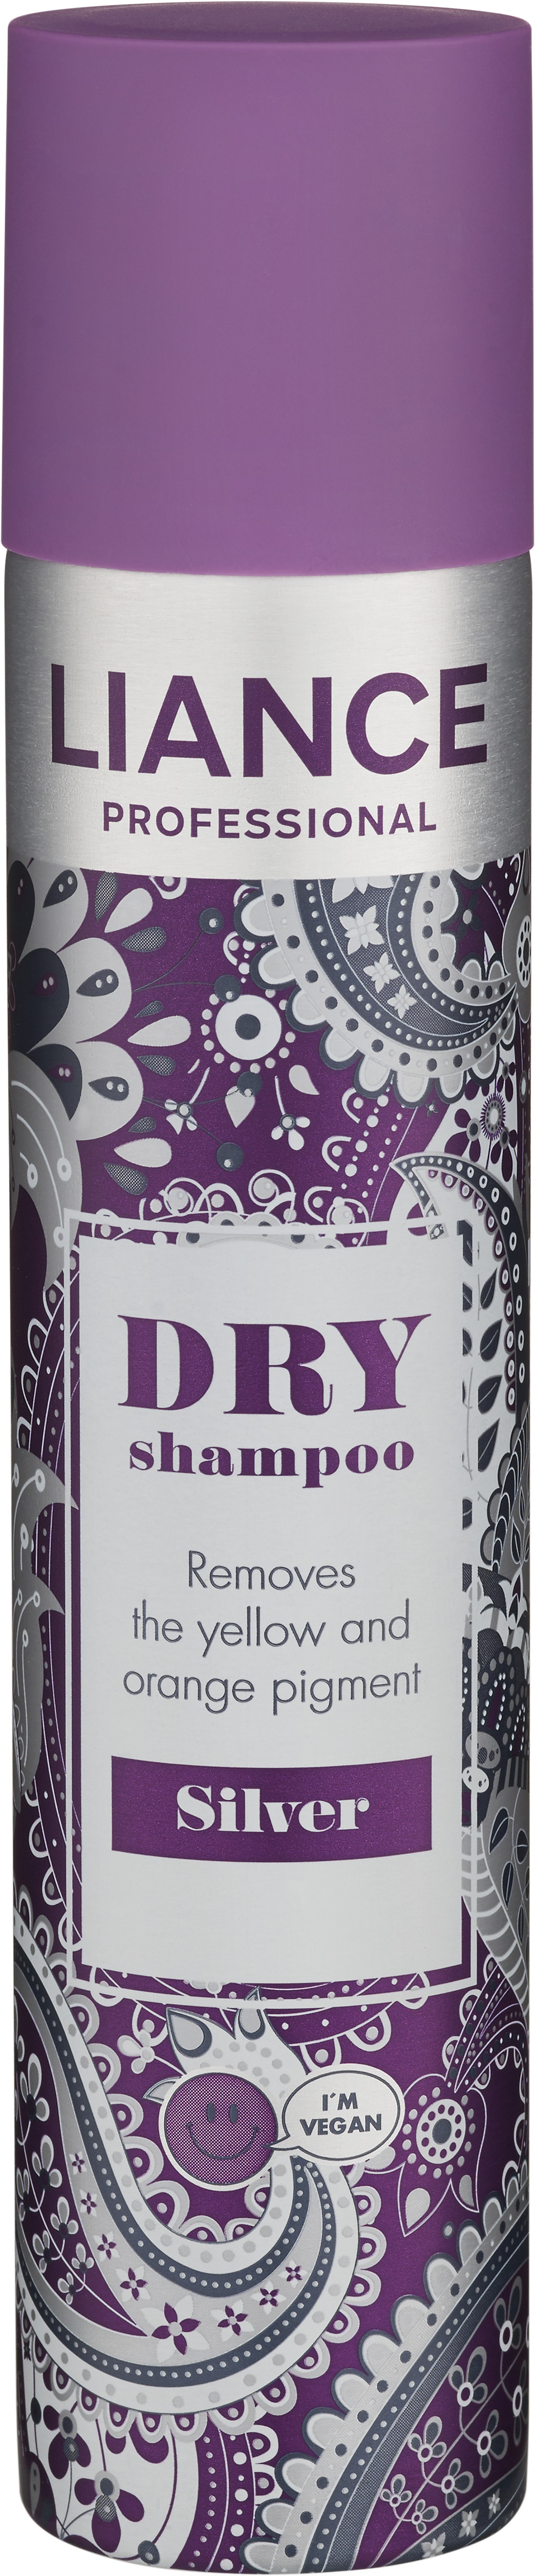 Liance Dry Shampoo Silver 200 ml